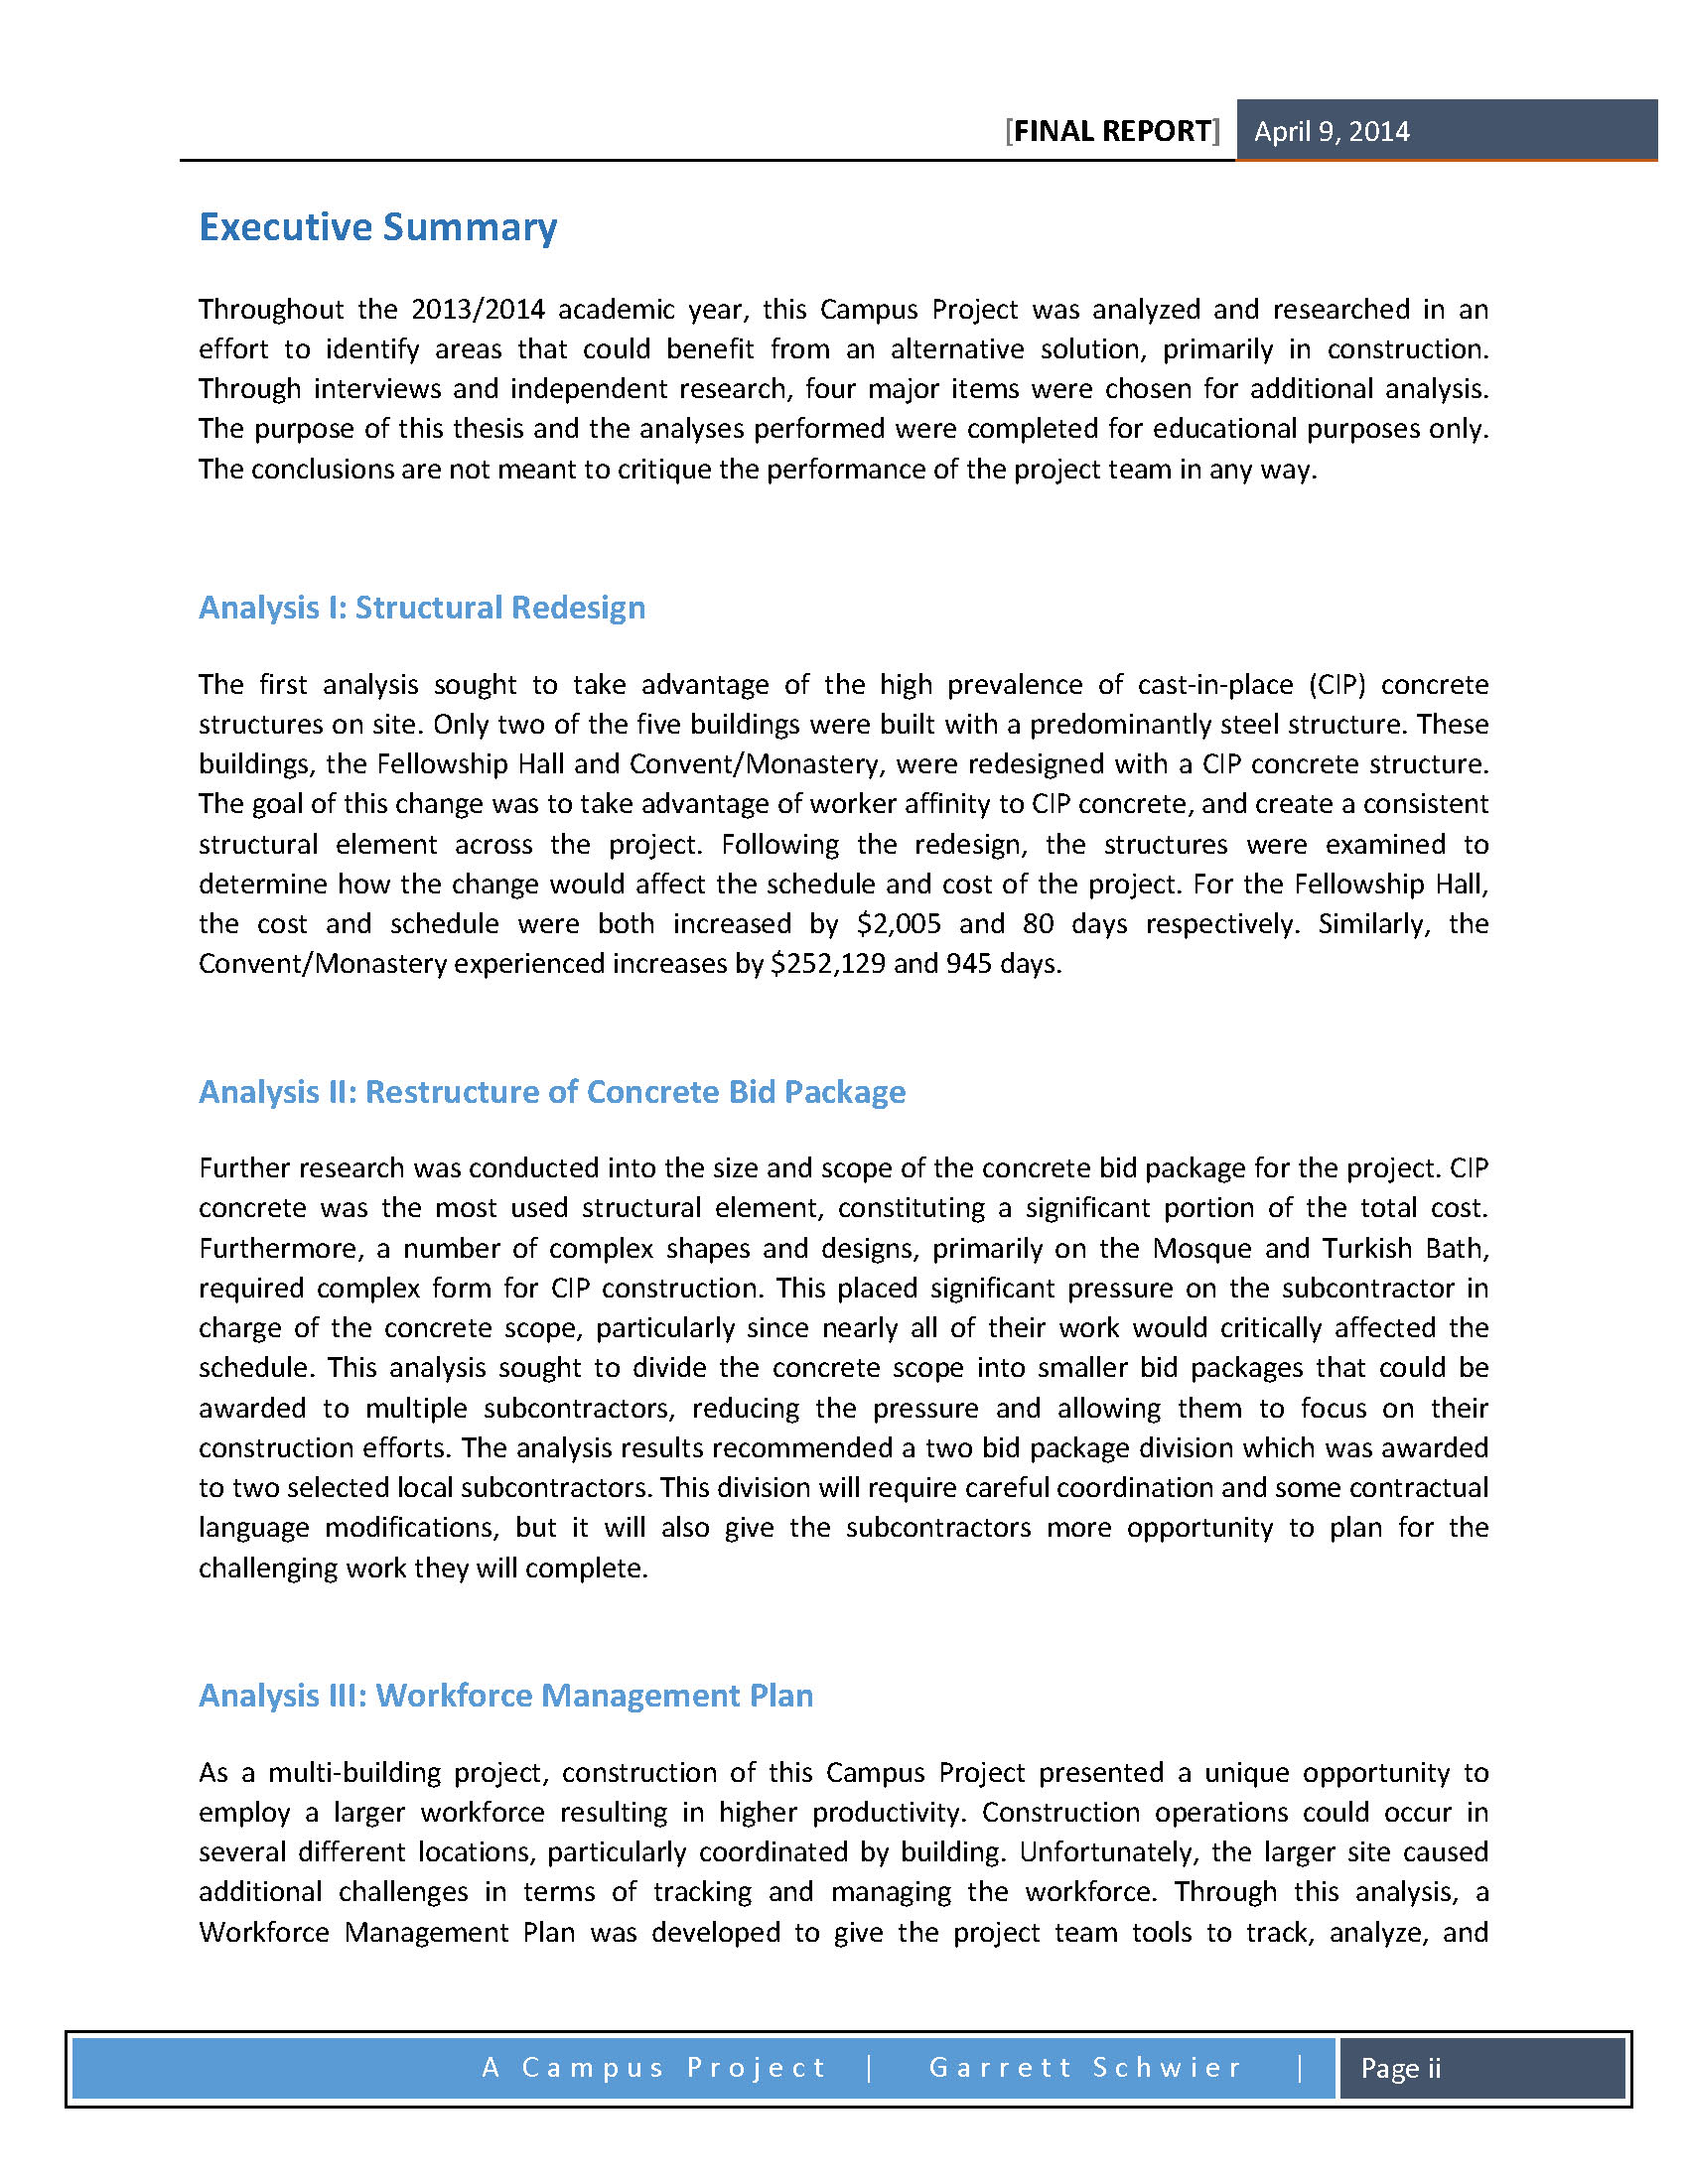 dissertation report on marketing pdf